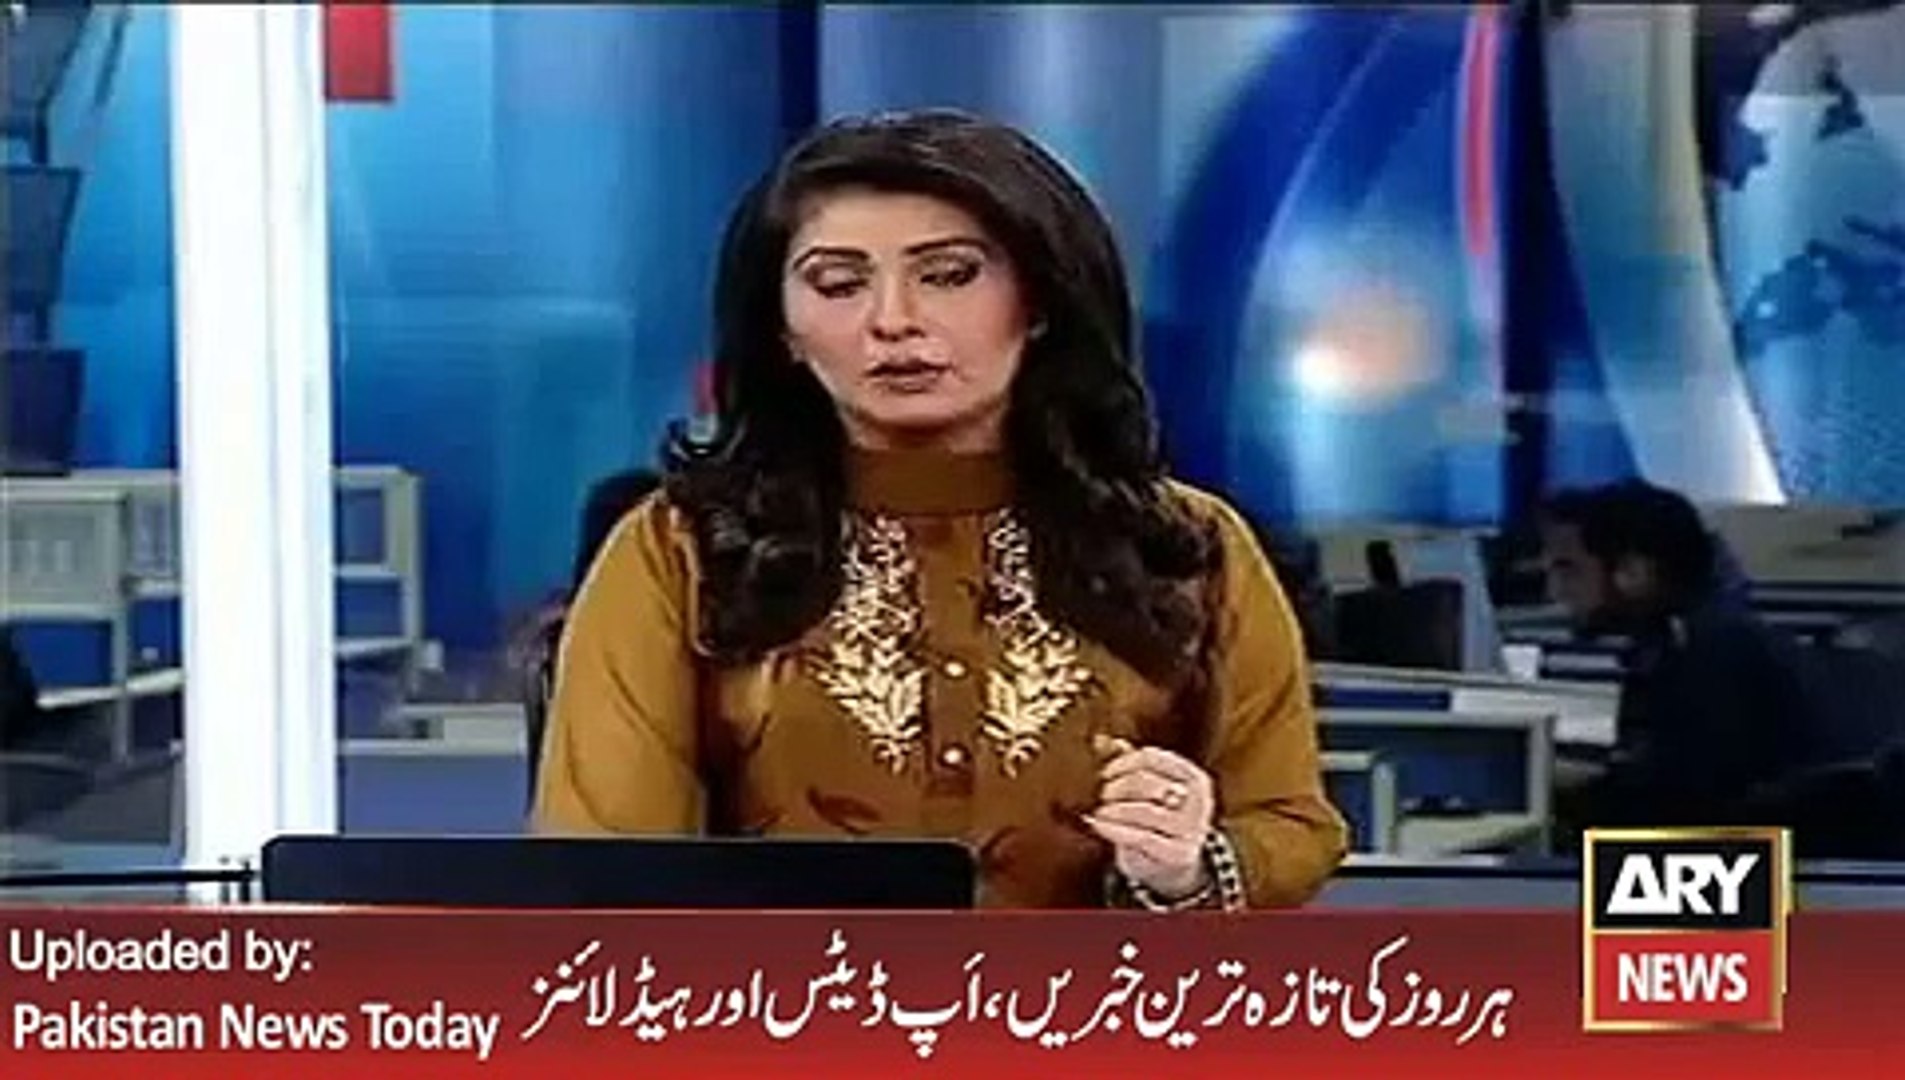 Latest News - Karachi Woman Qatul Issue Solved - ARY News Headlines 27 January 2016